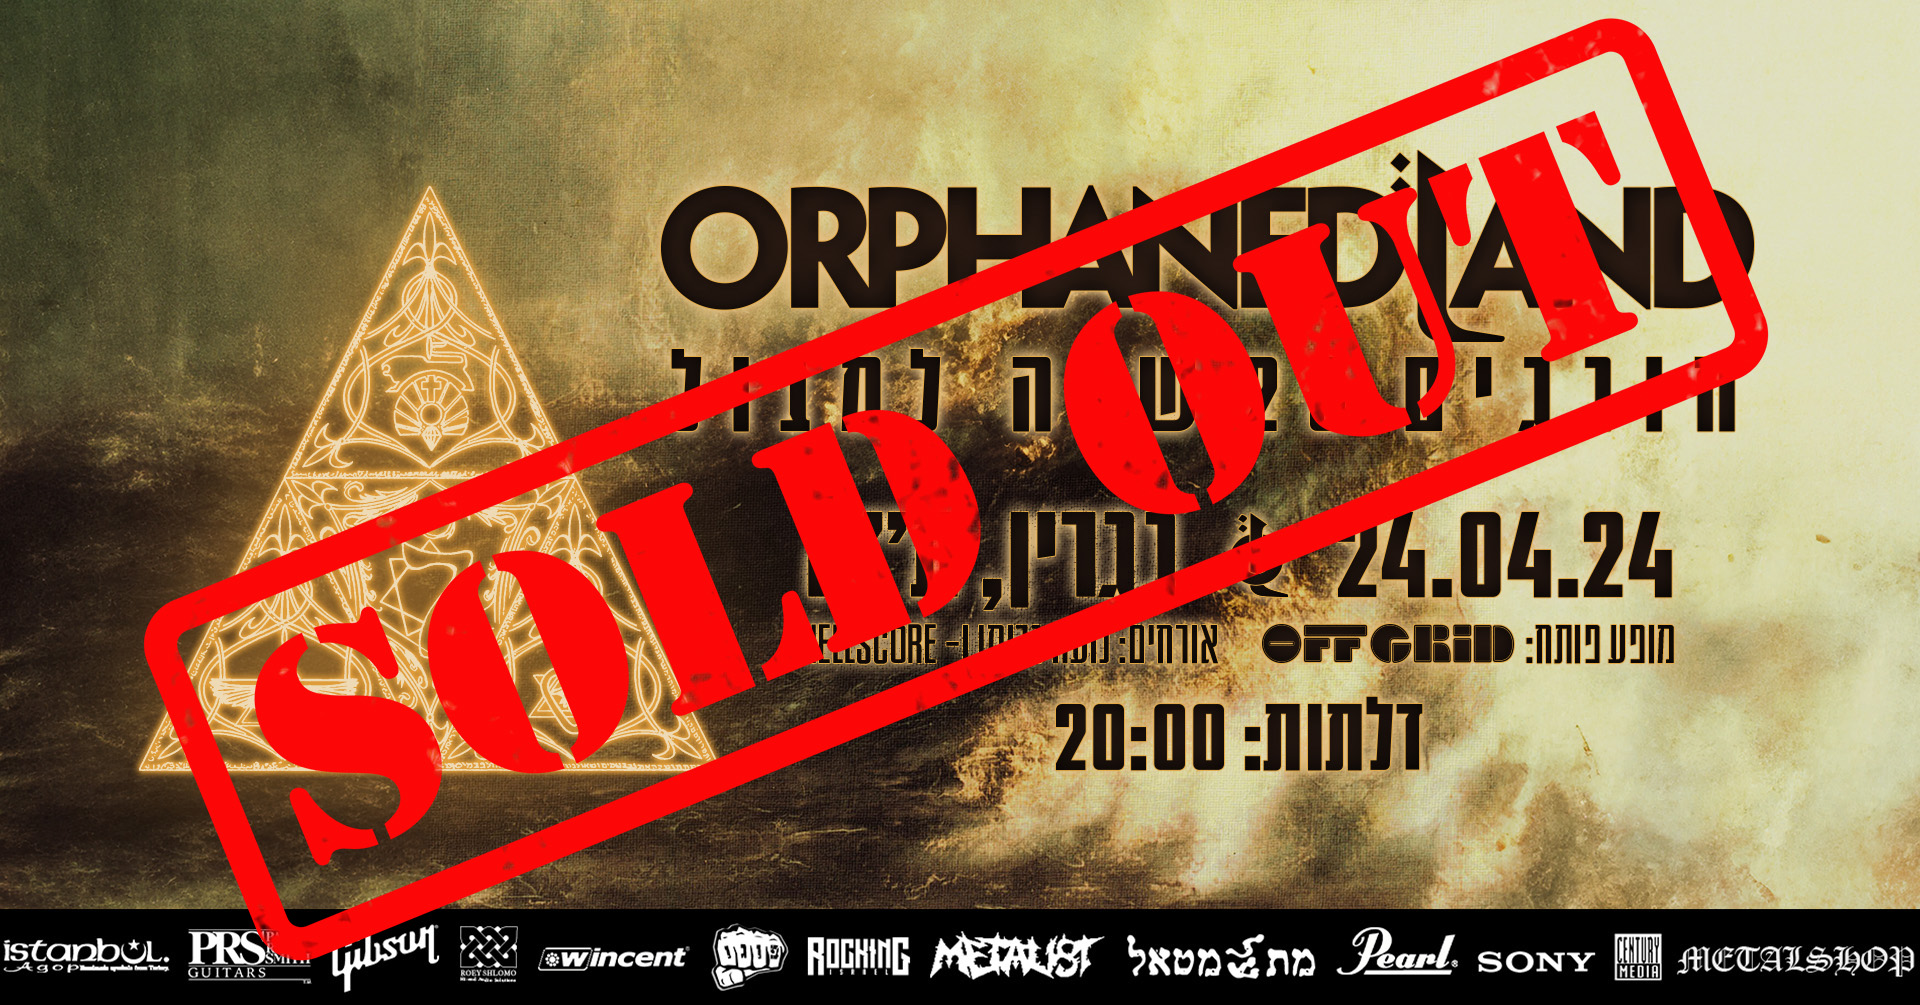 Orphaned Land (Show #1) @ Gagarin